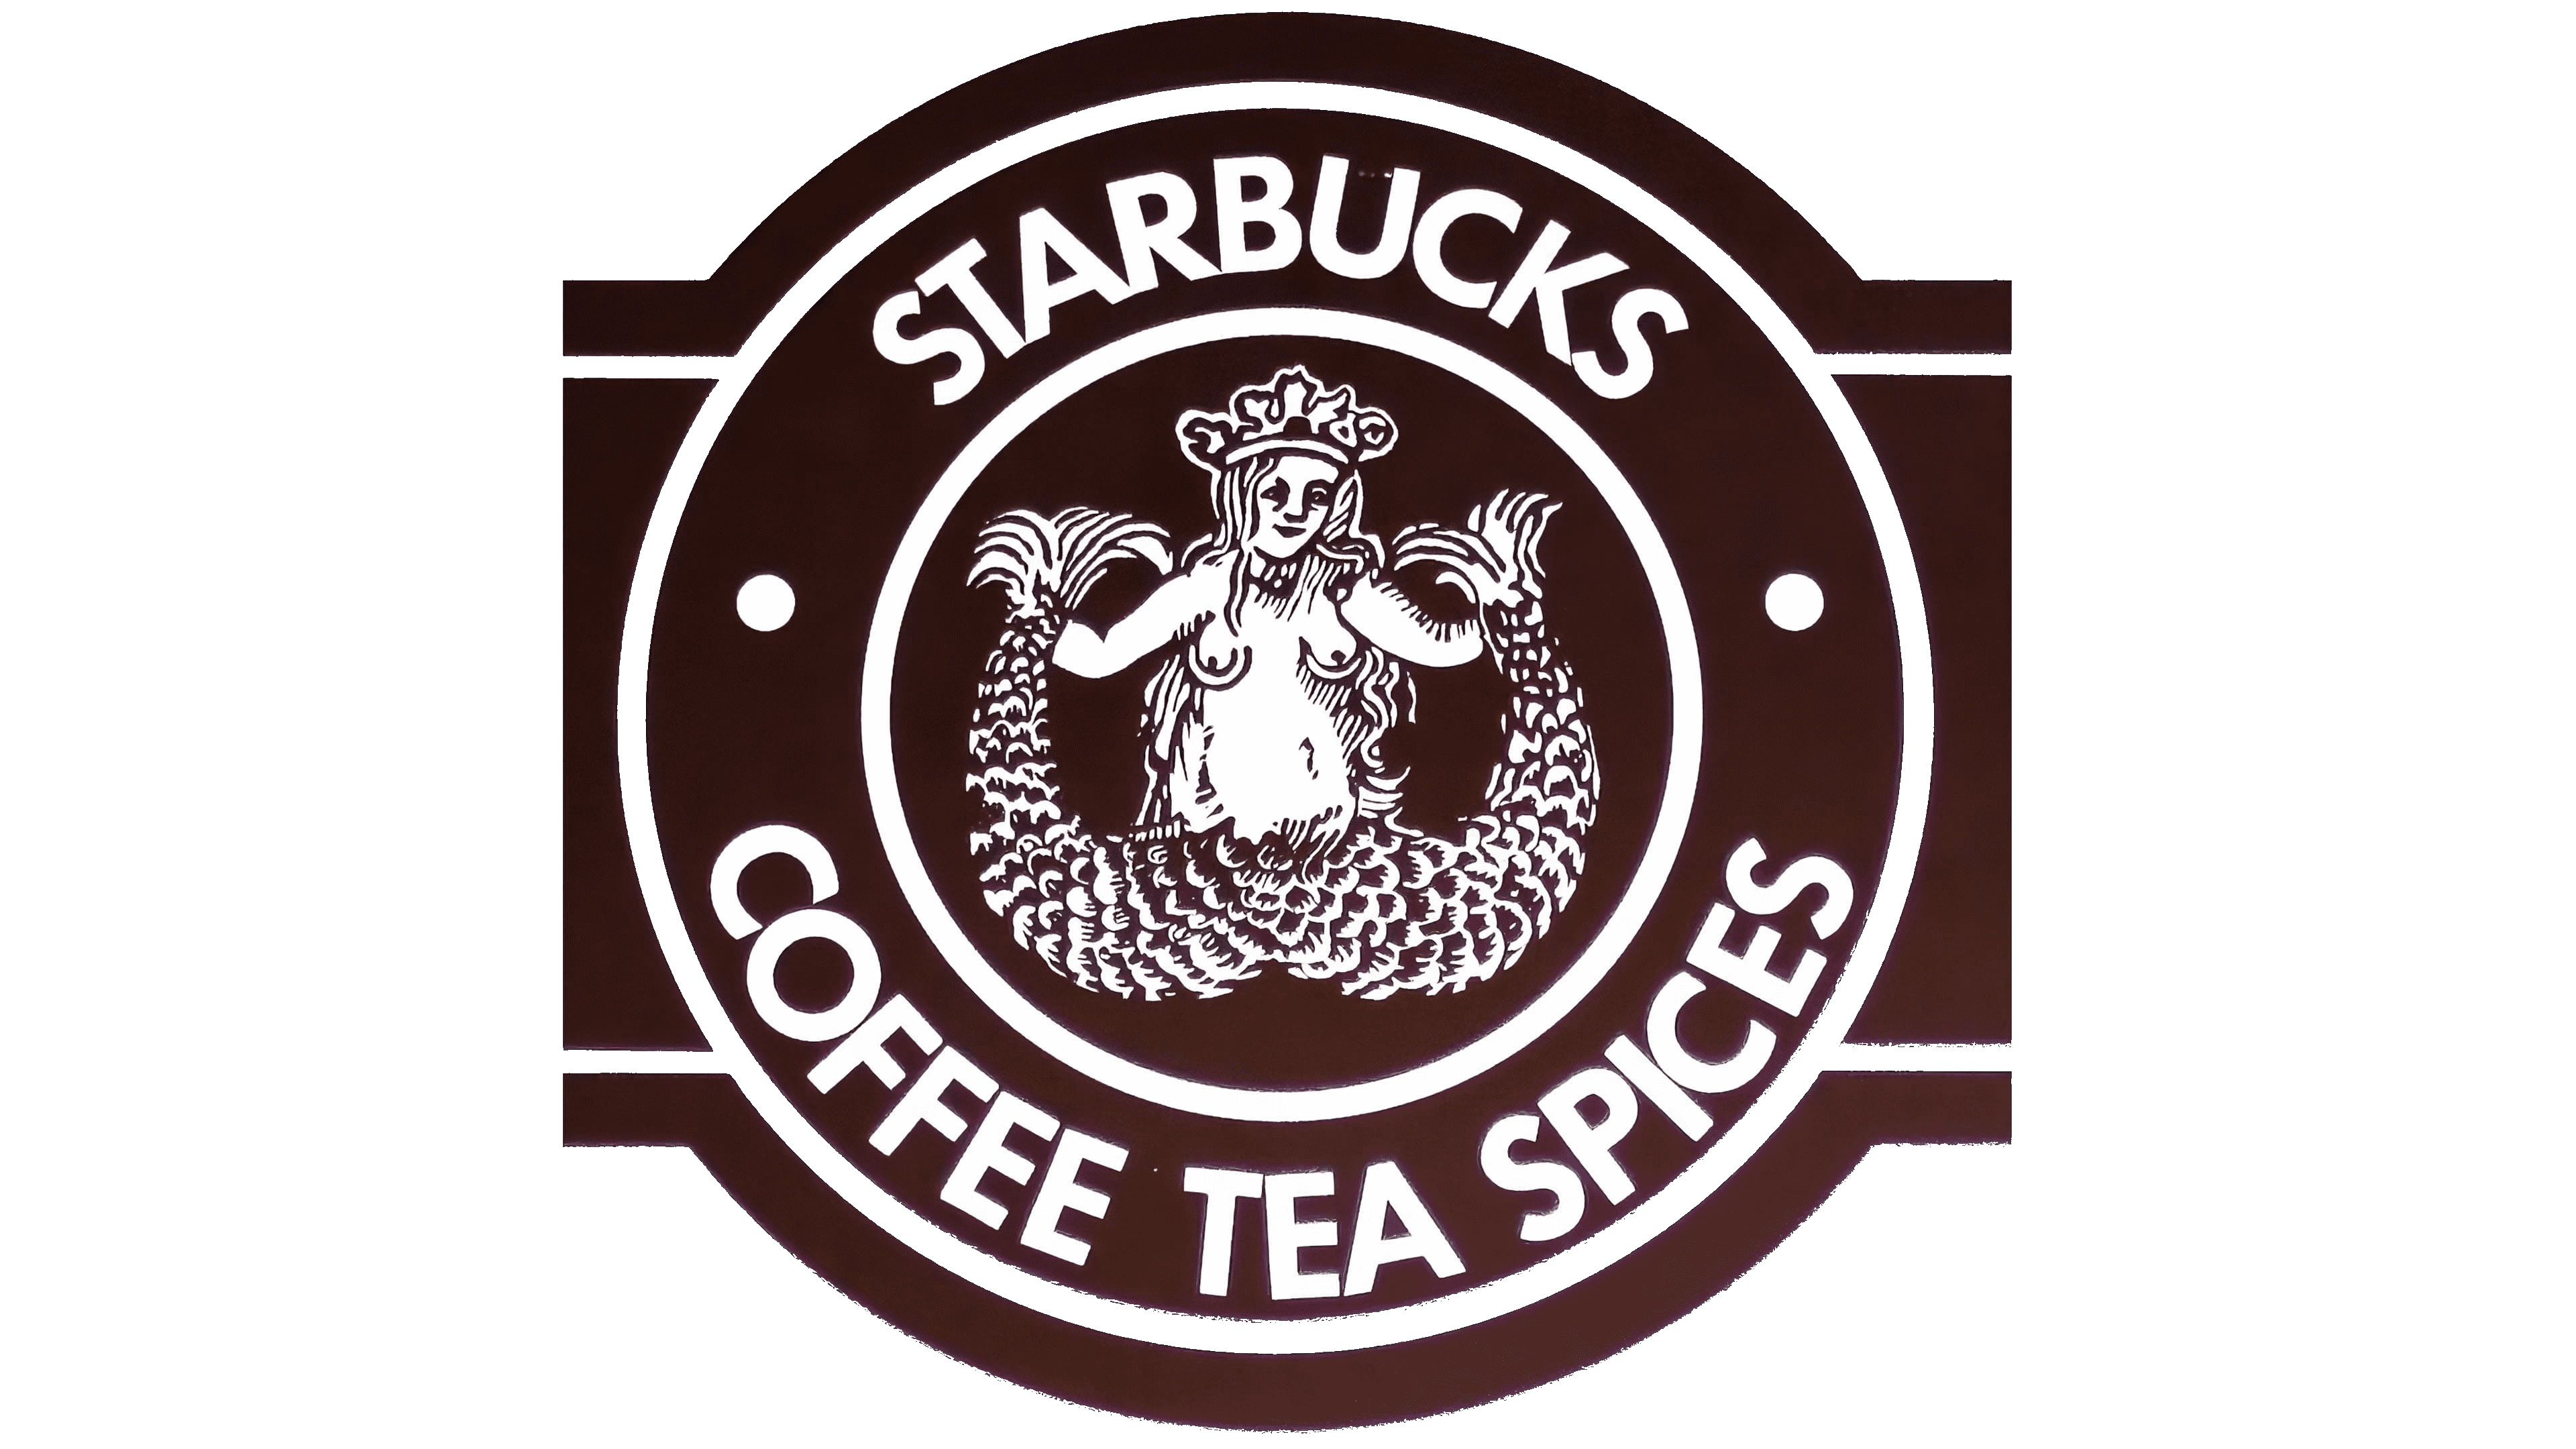 Starbucks logo download in SVG vector format or in PNG format